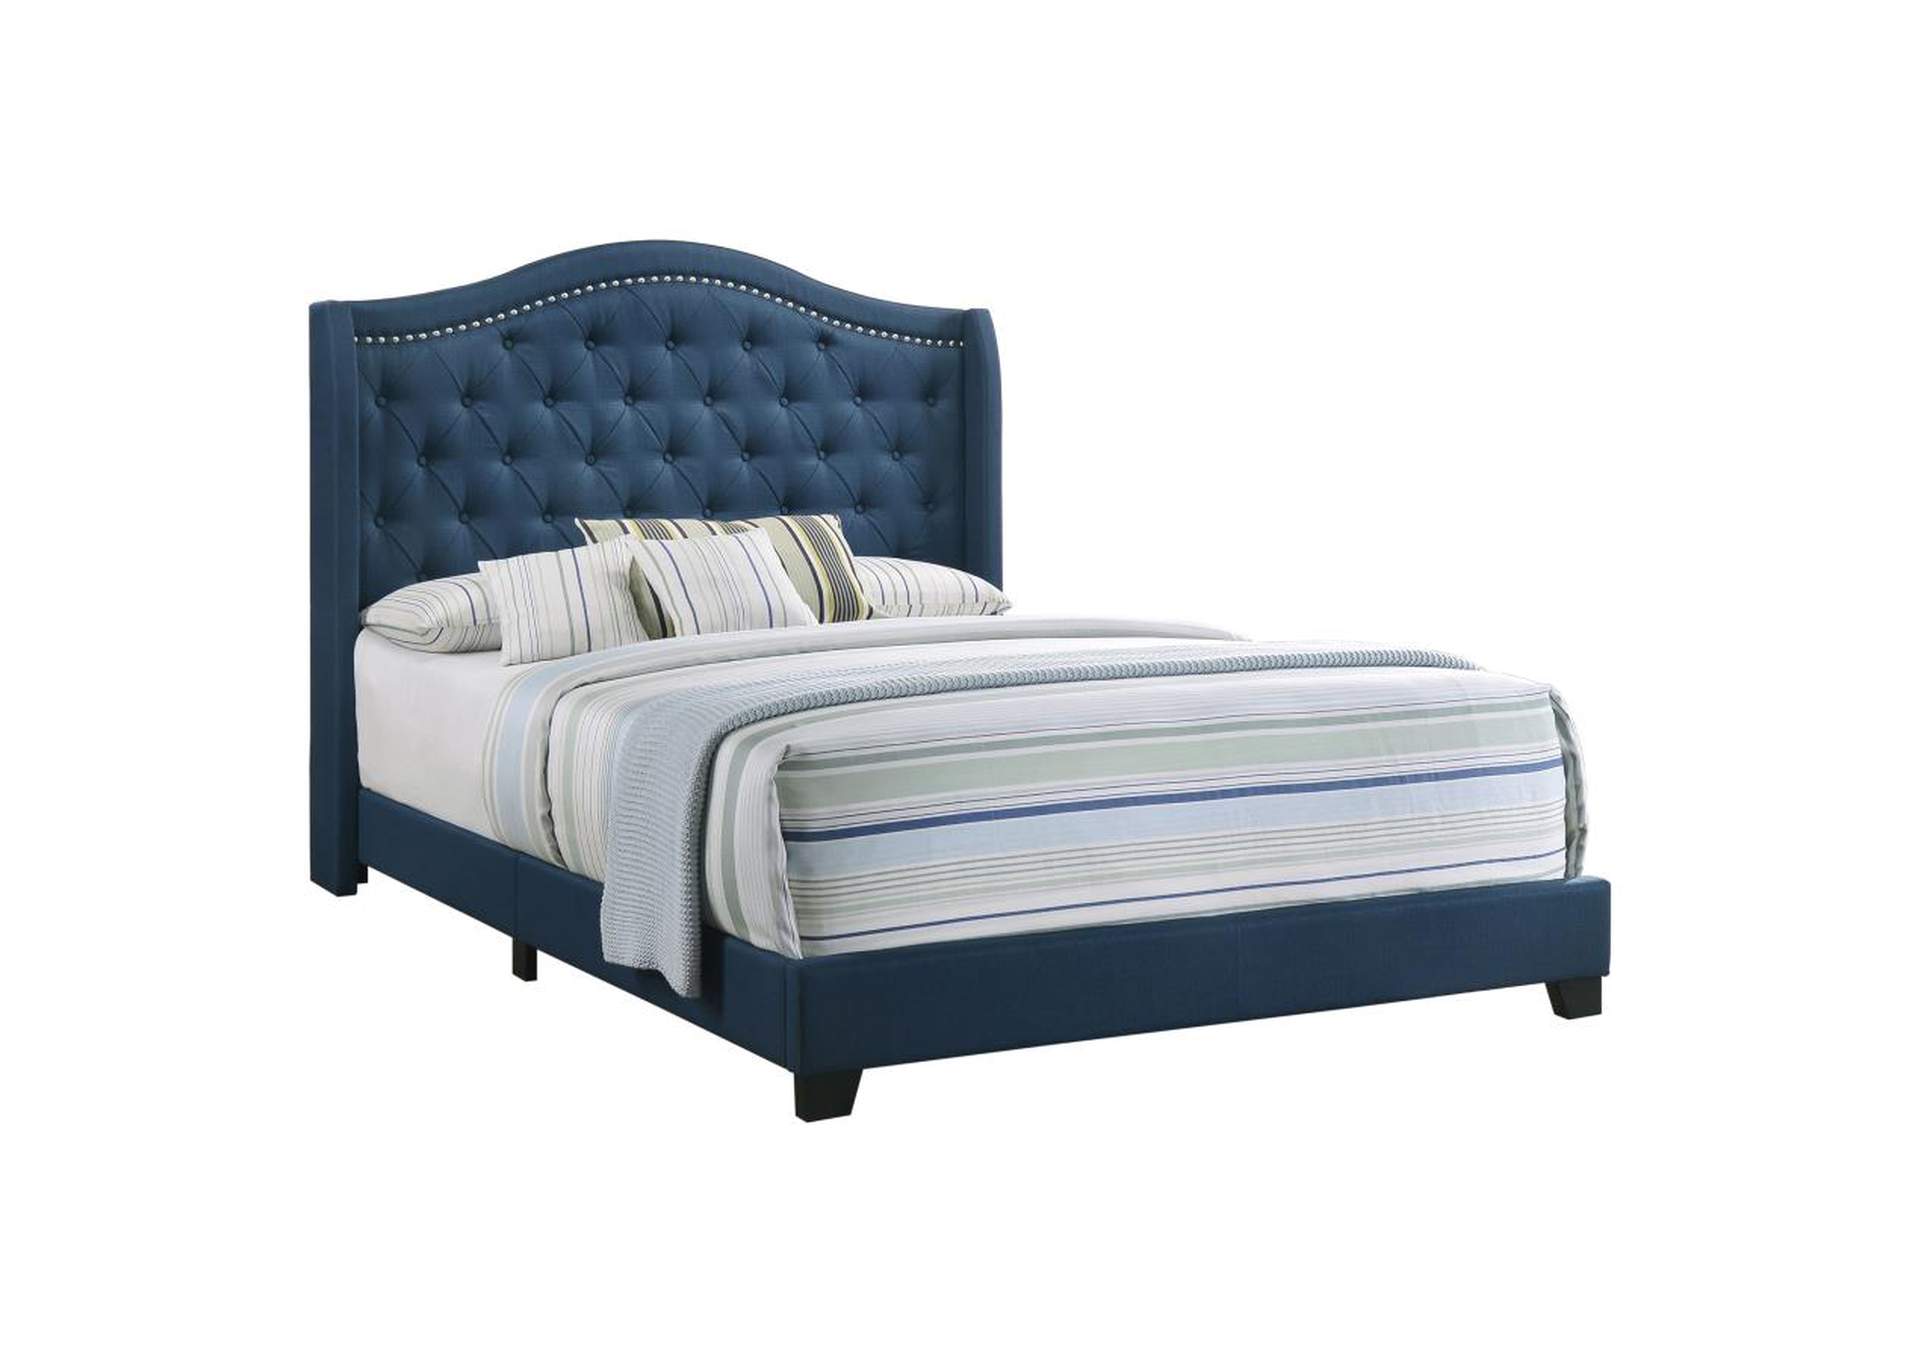 Sonoma Full Camel Headboard Bed With Nailhead Trim Blue,Coaster Furniture